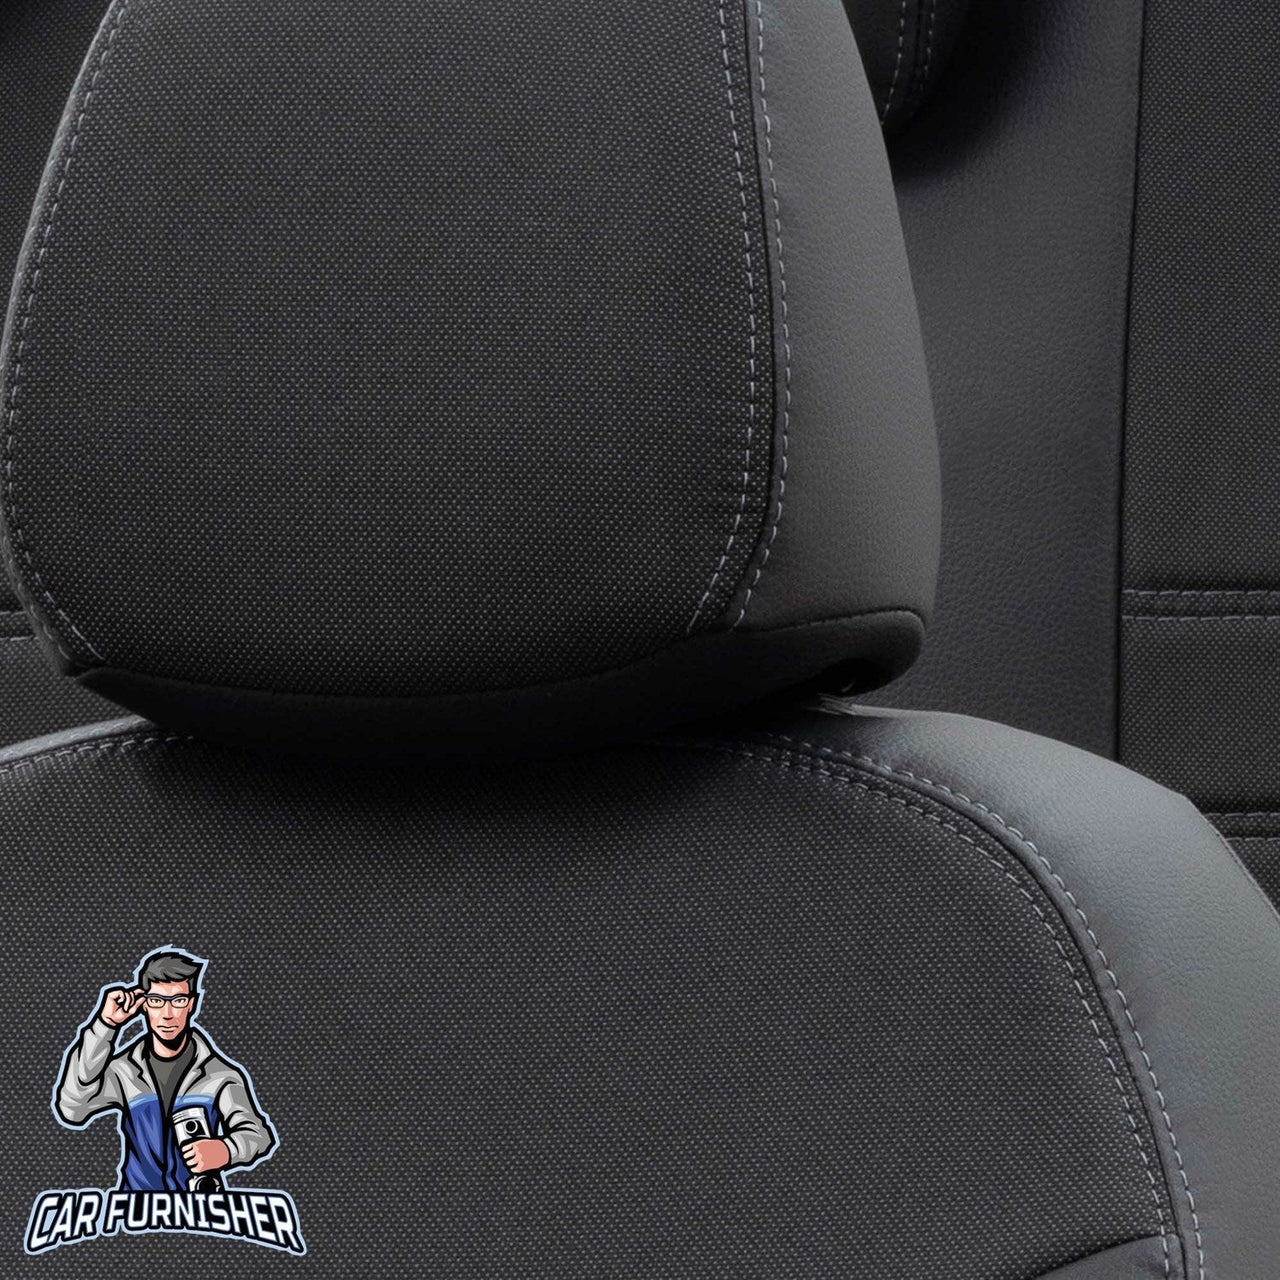 Hyundai i10 Seat Covers Paris Leather & Jacquard Design Black Leather & Jacquard Fabric